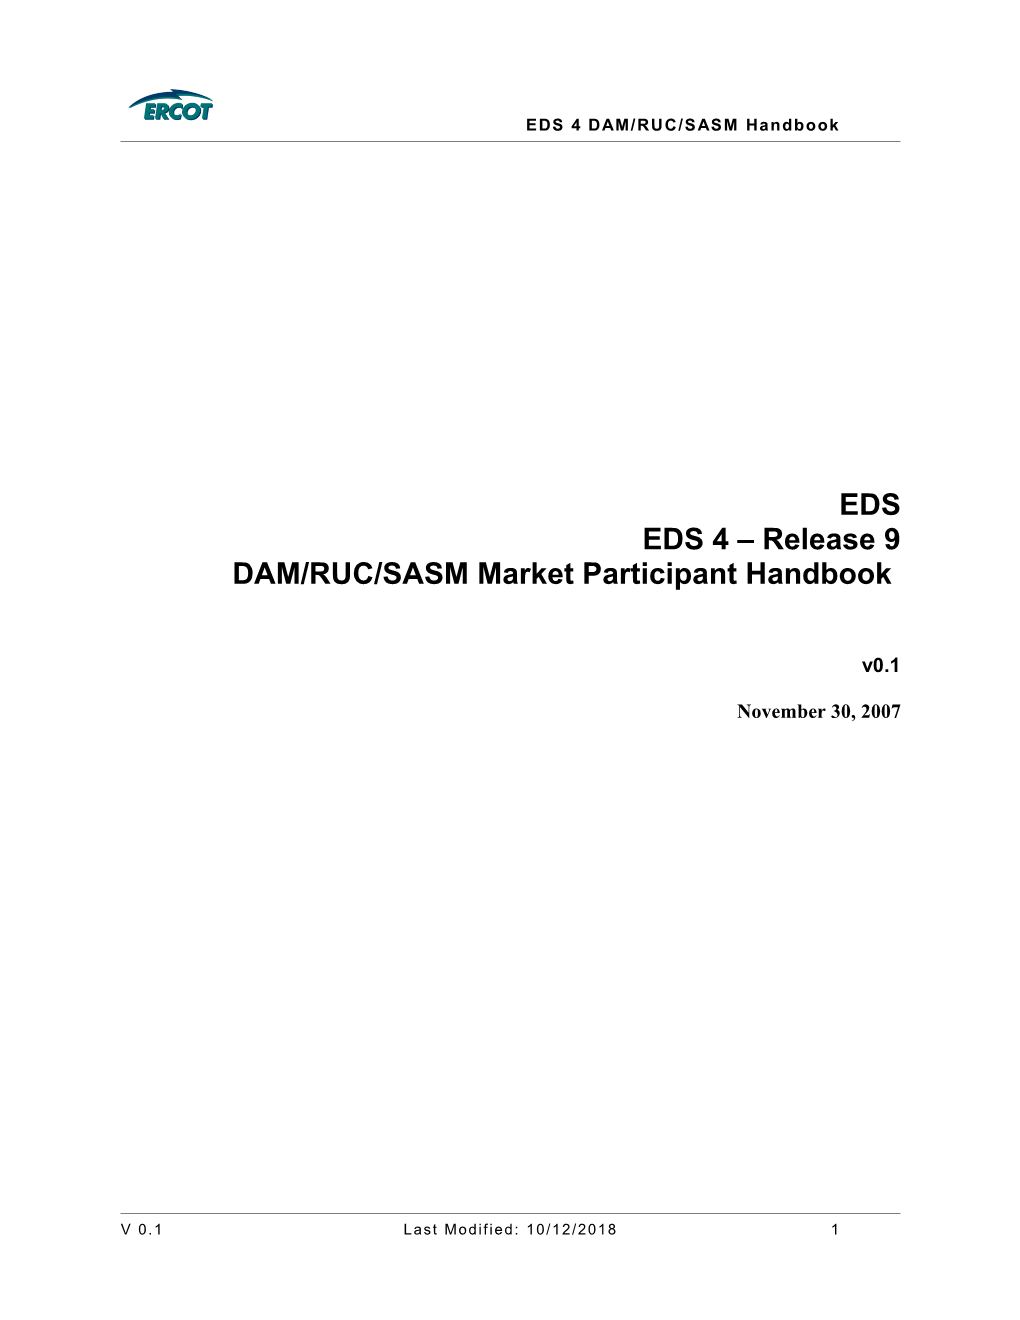 DAM/RUC/Sasmmarket Participant Handbook